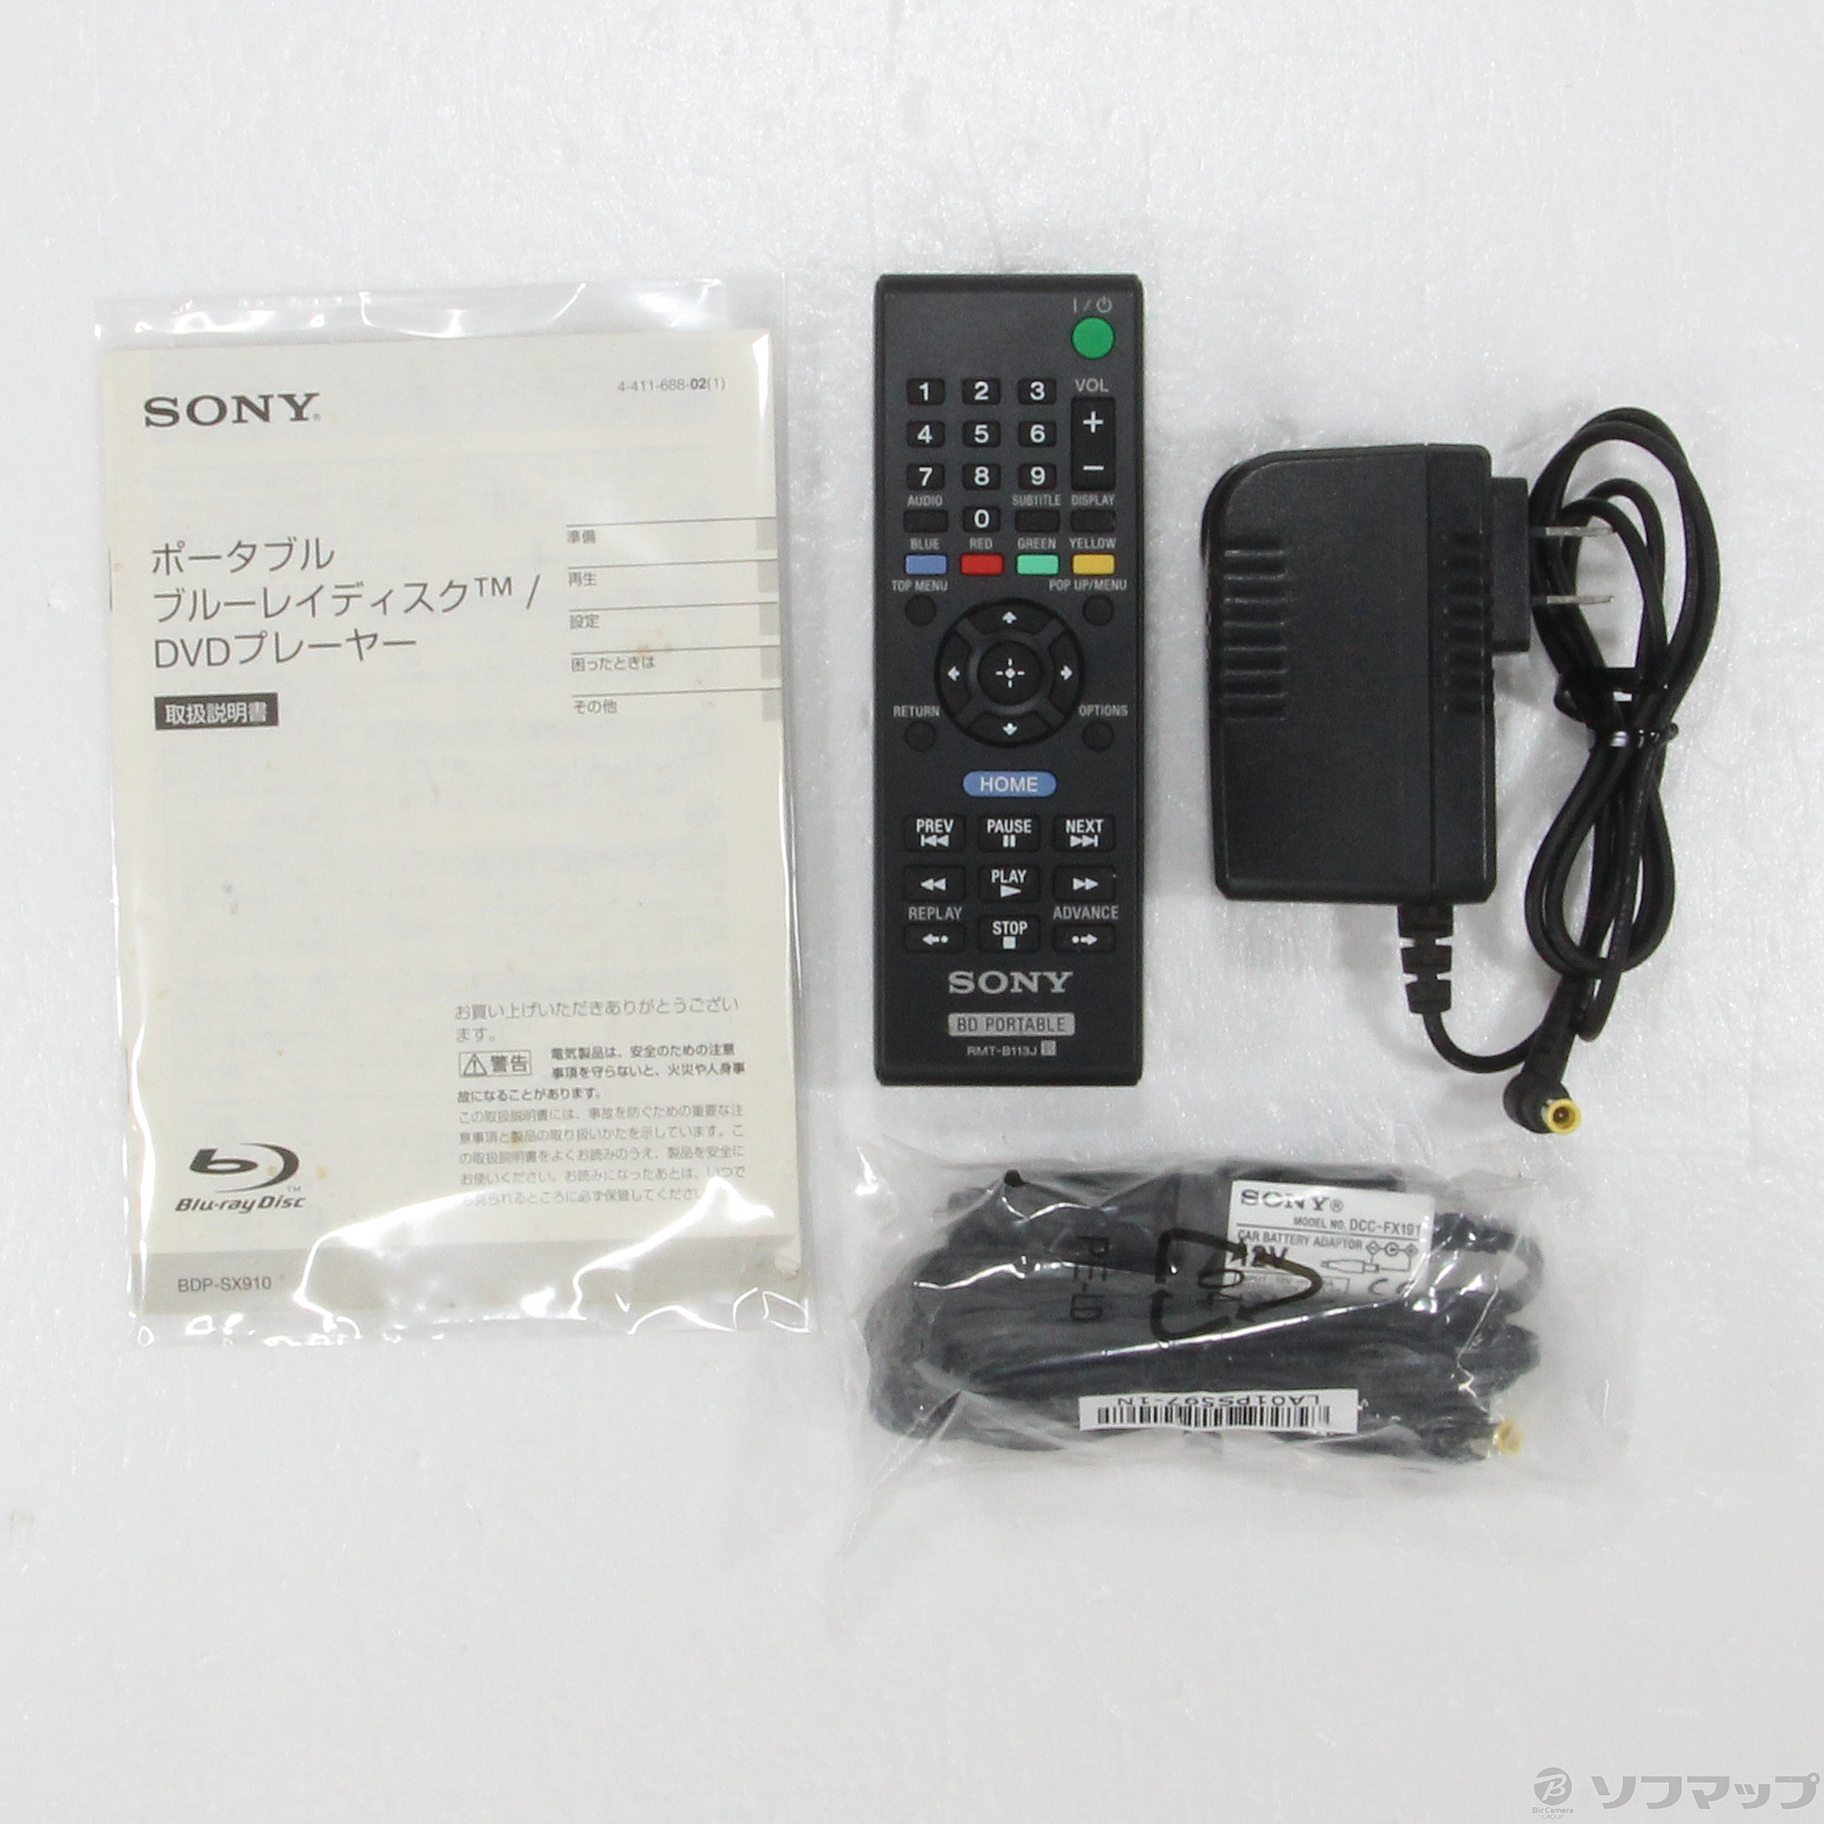 SONY Blu-ray DVDプレーヤー BDP-S5100 - プレーヤー